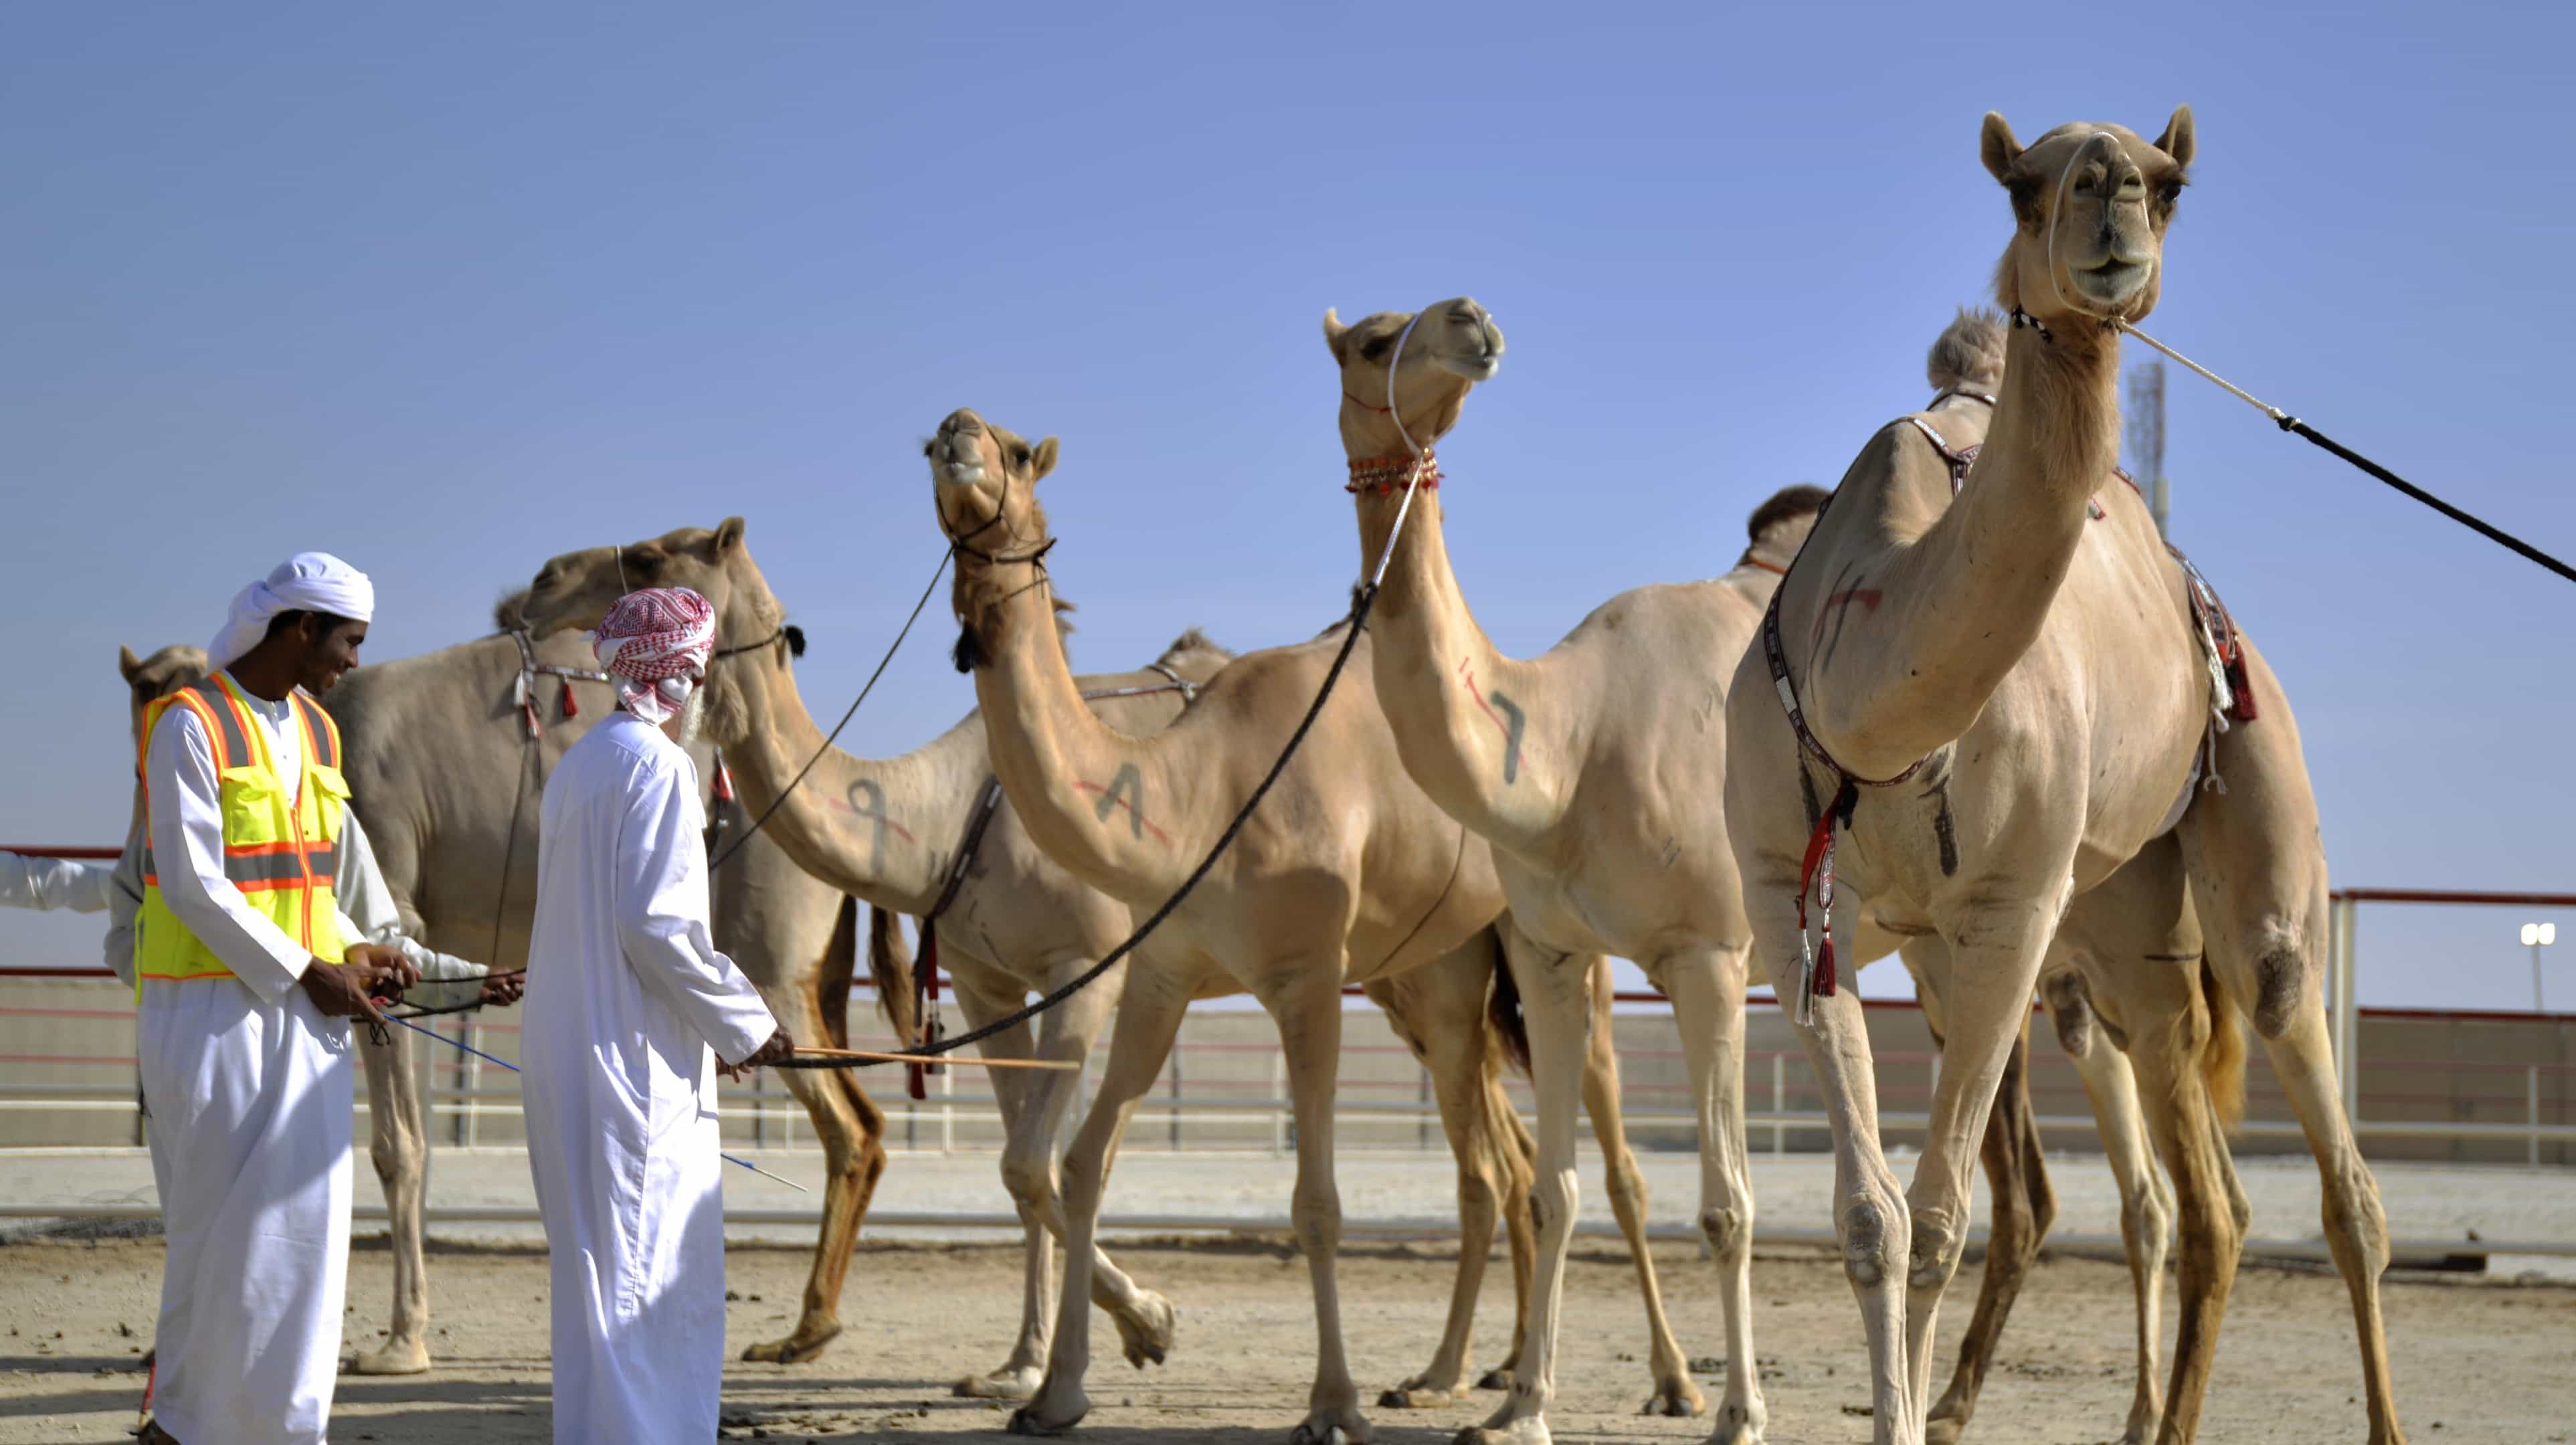 9. Посмотрите гонки на верблюдах в заповеднике Al Wathba